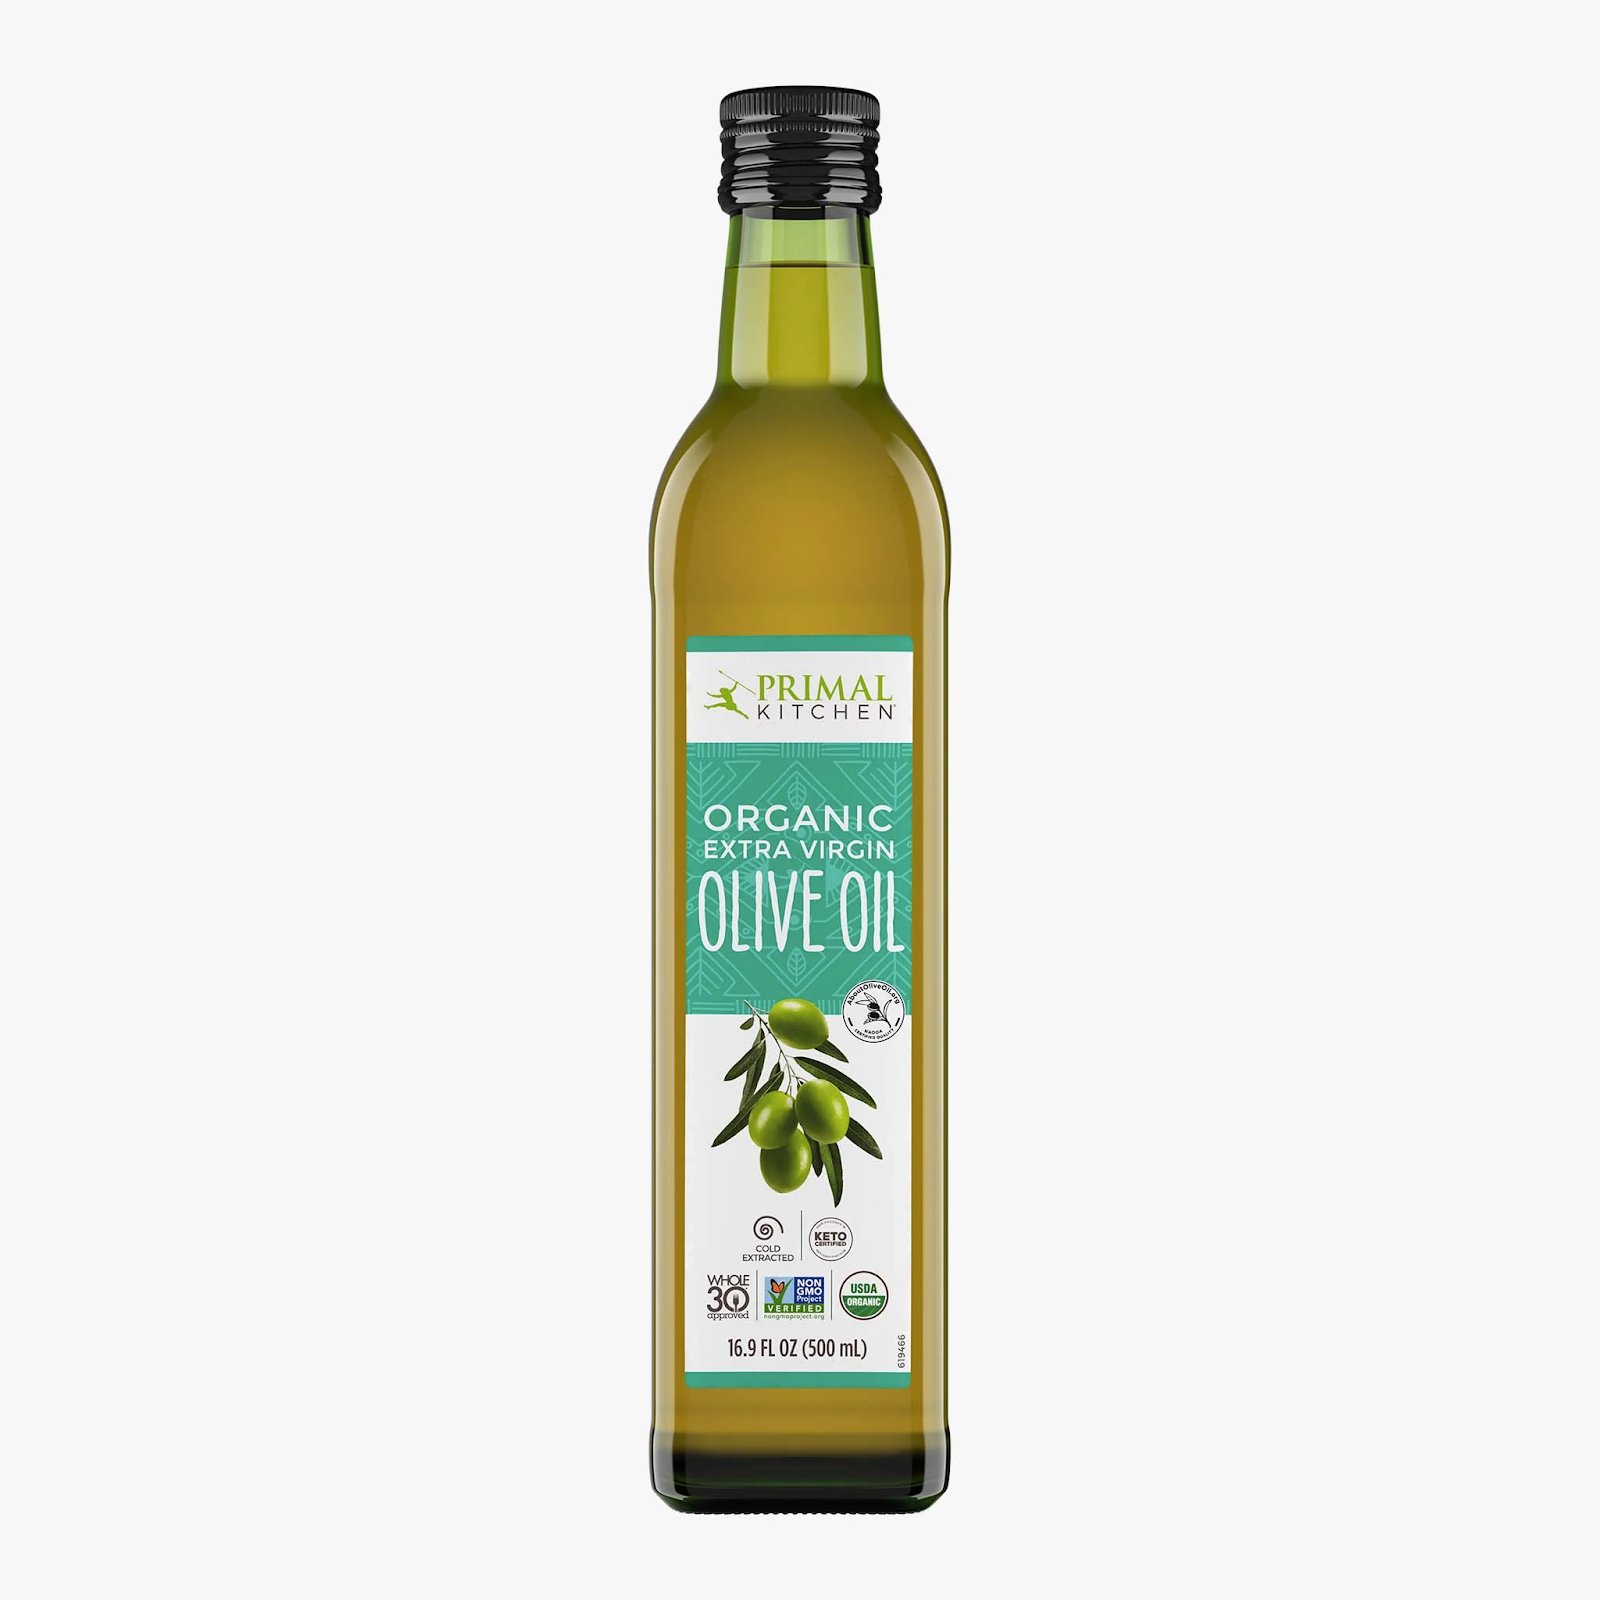 Best Olive Oil for Cooking: Primal Kitchen Organic Extra Virgin Olive Oil